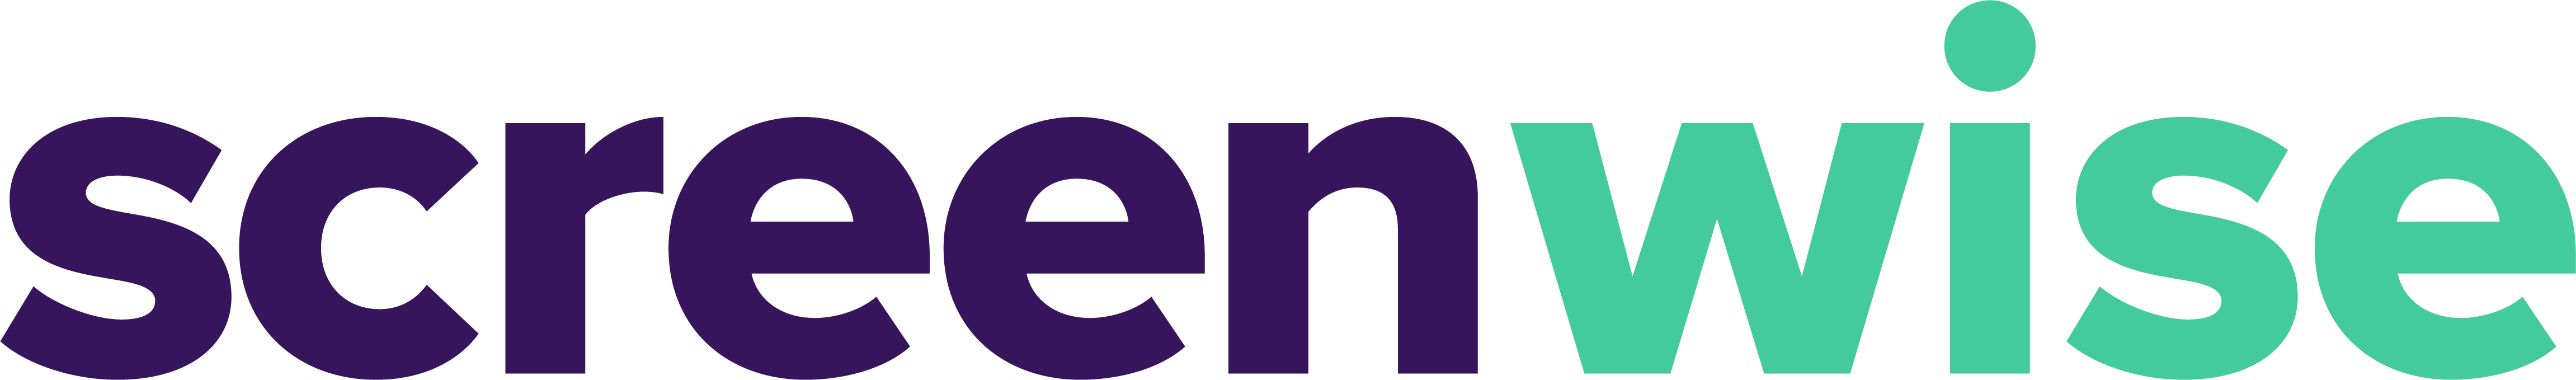 Screen Wise logo